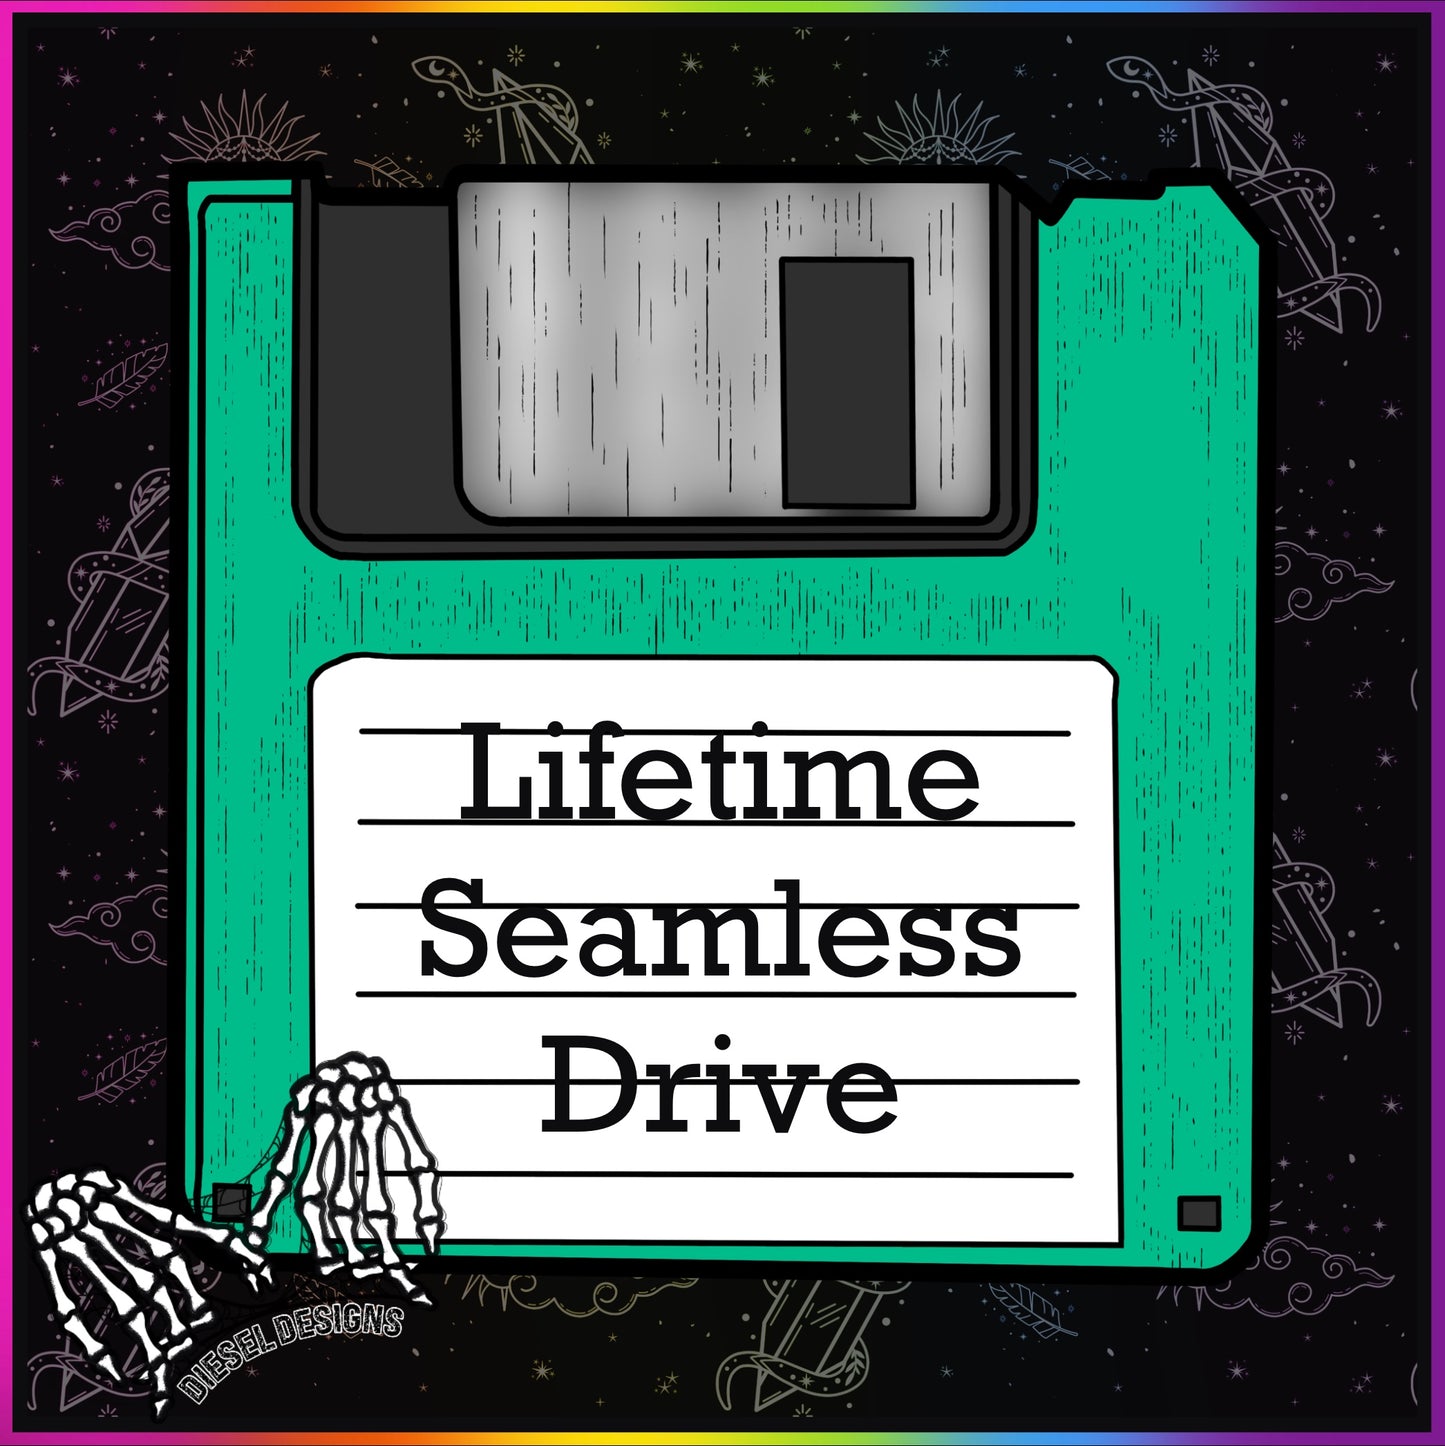 Seamless | Lifetime | Google Drive